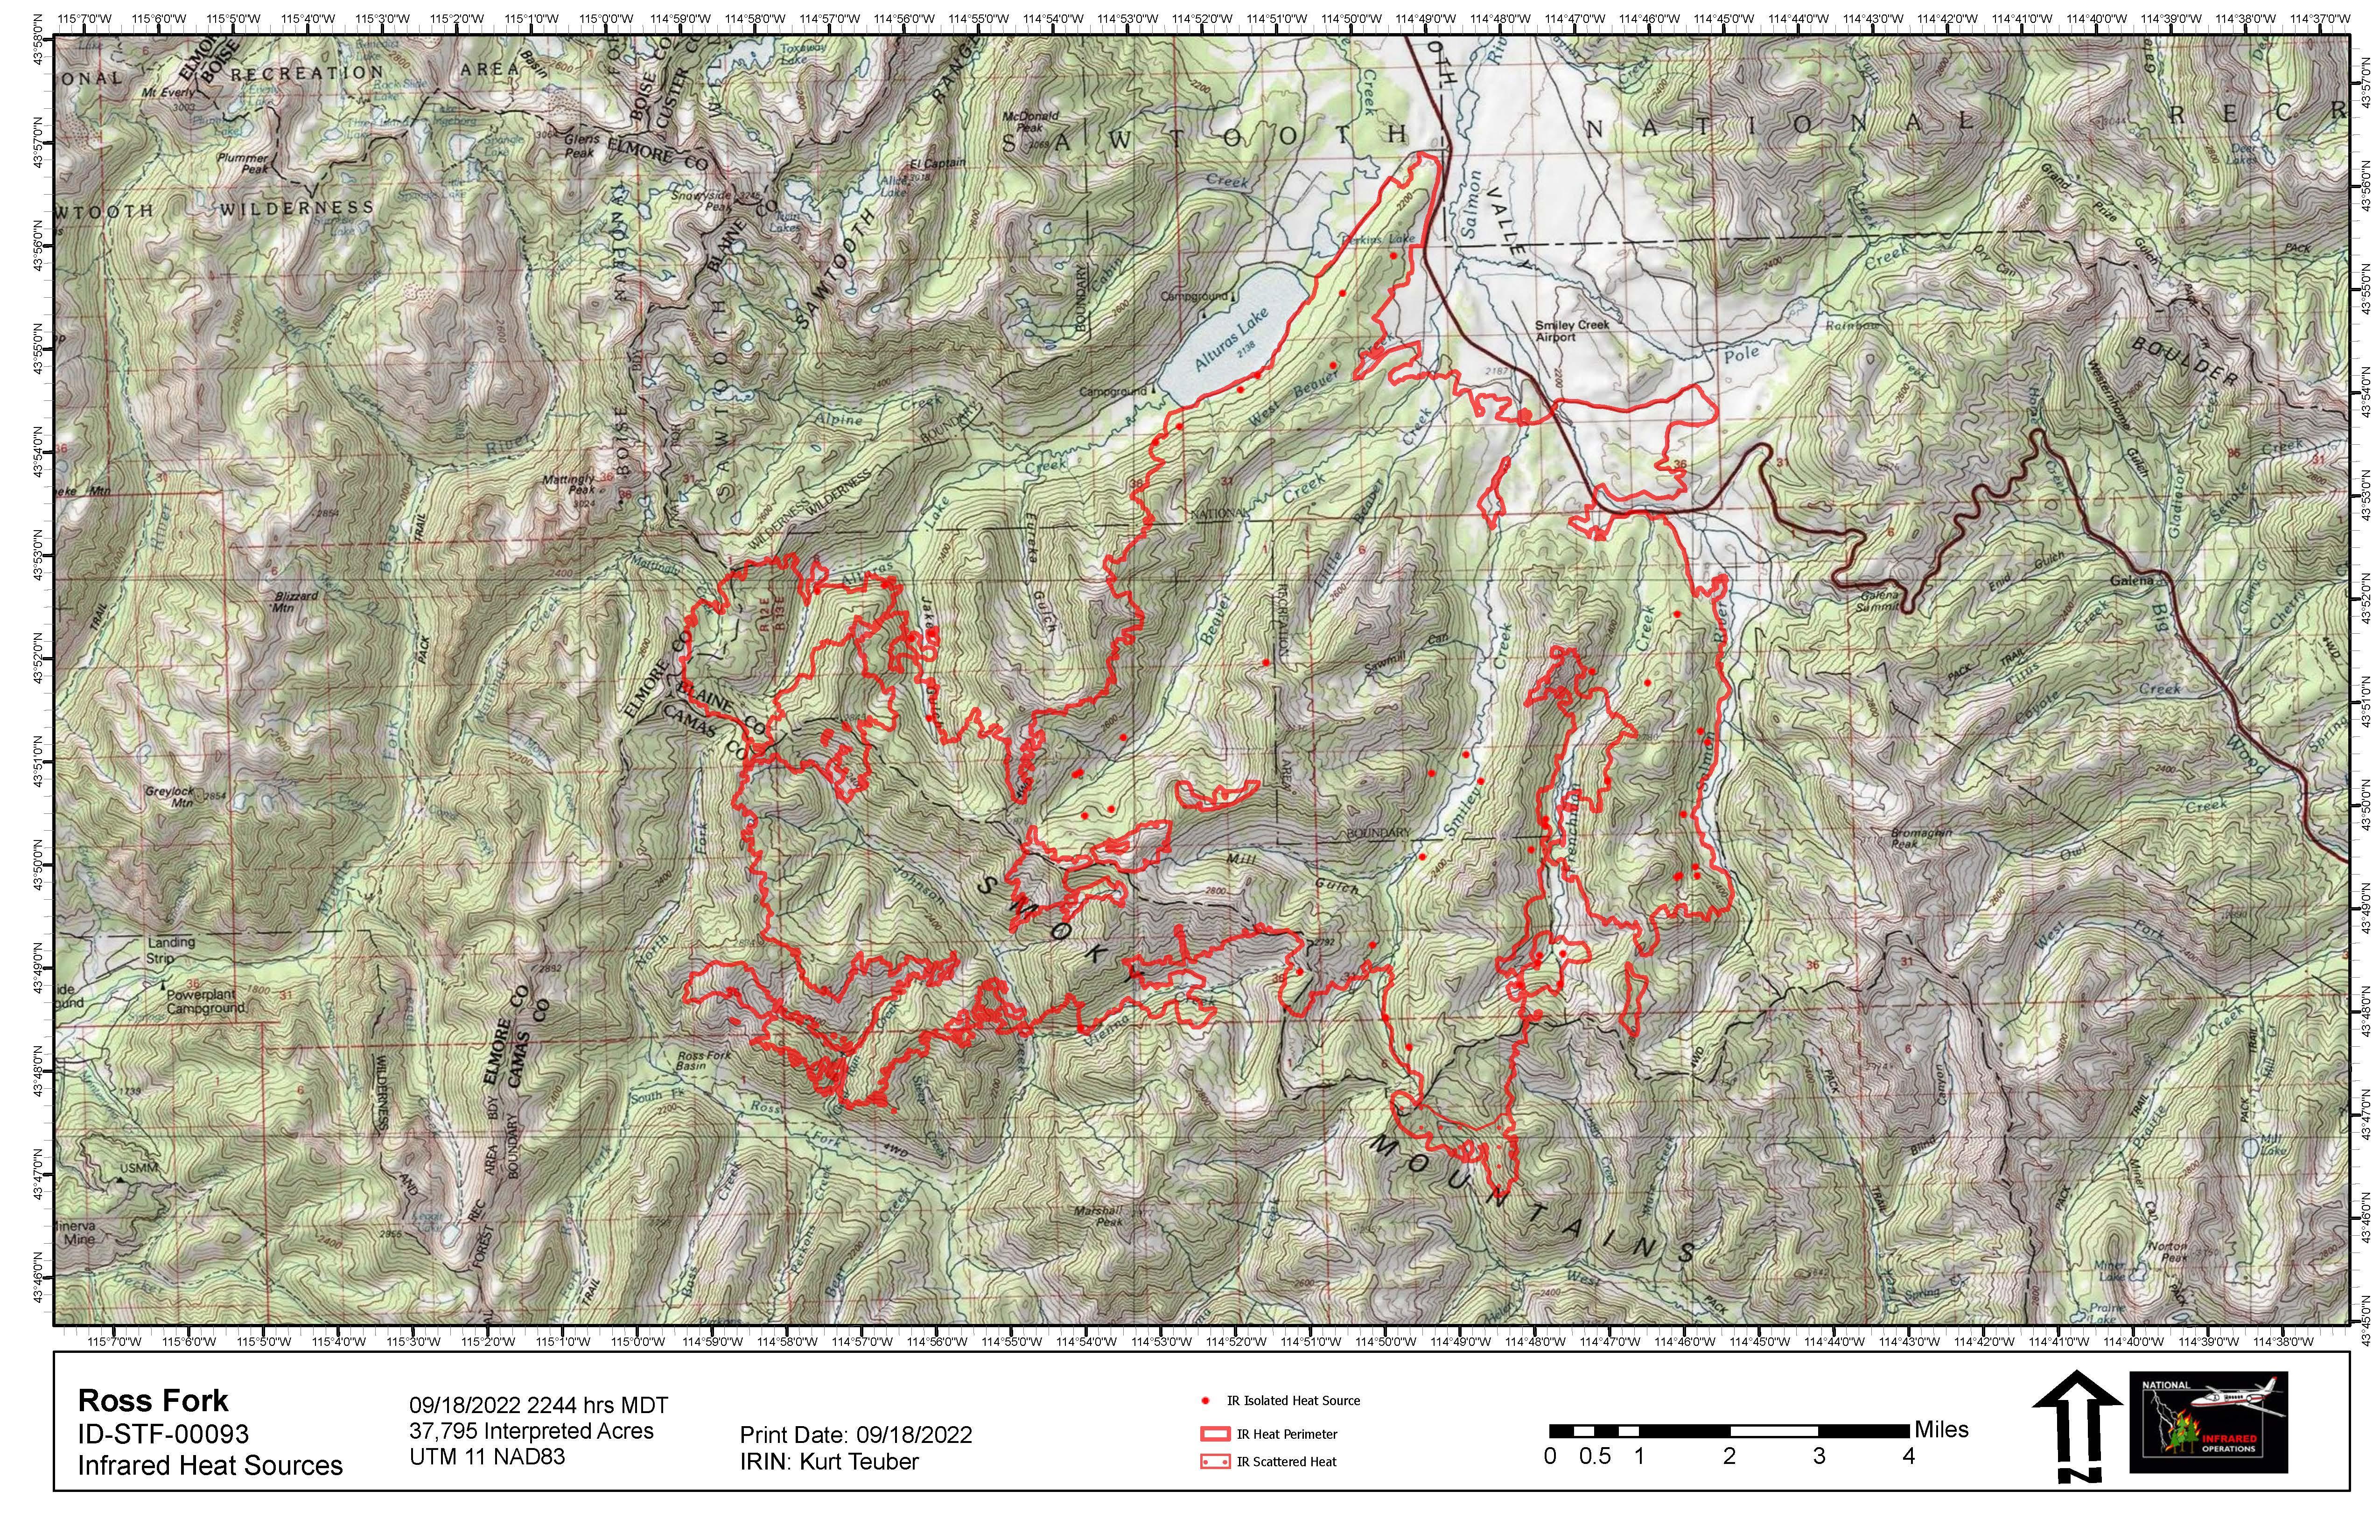 Ross Fork Fire perimeter map, Monday, 9/19